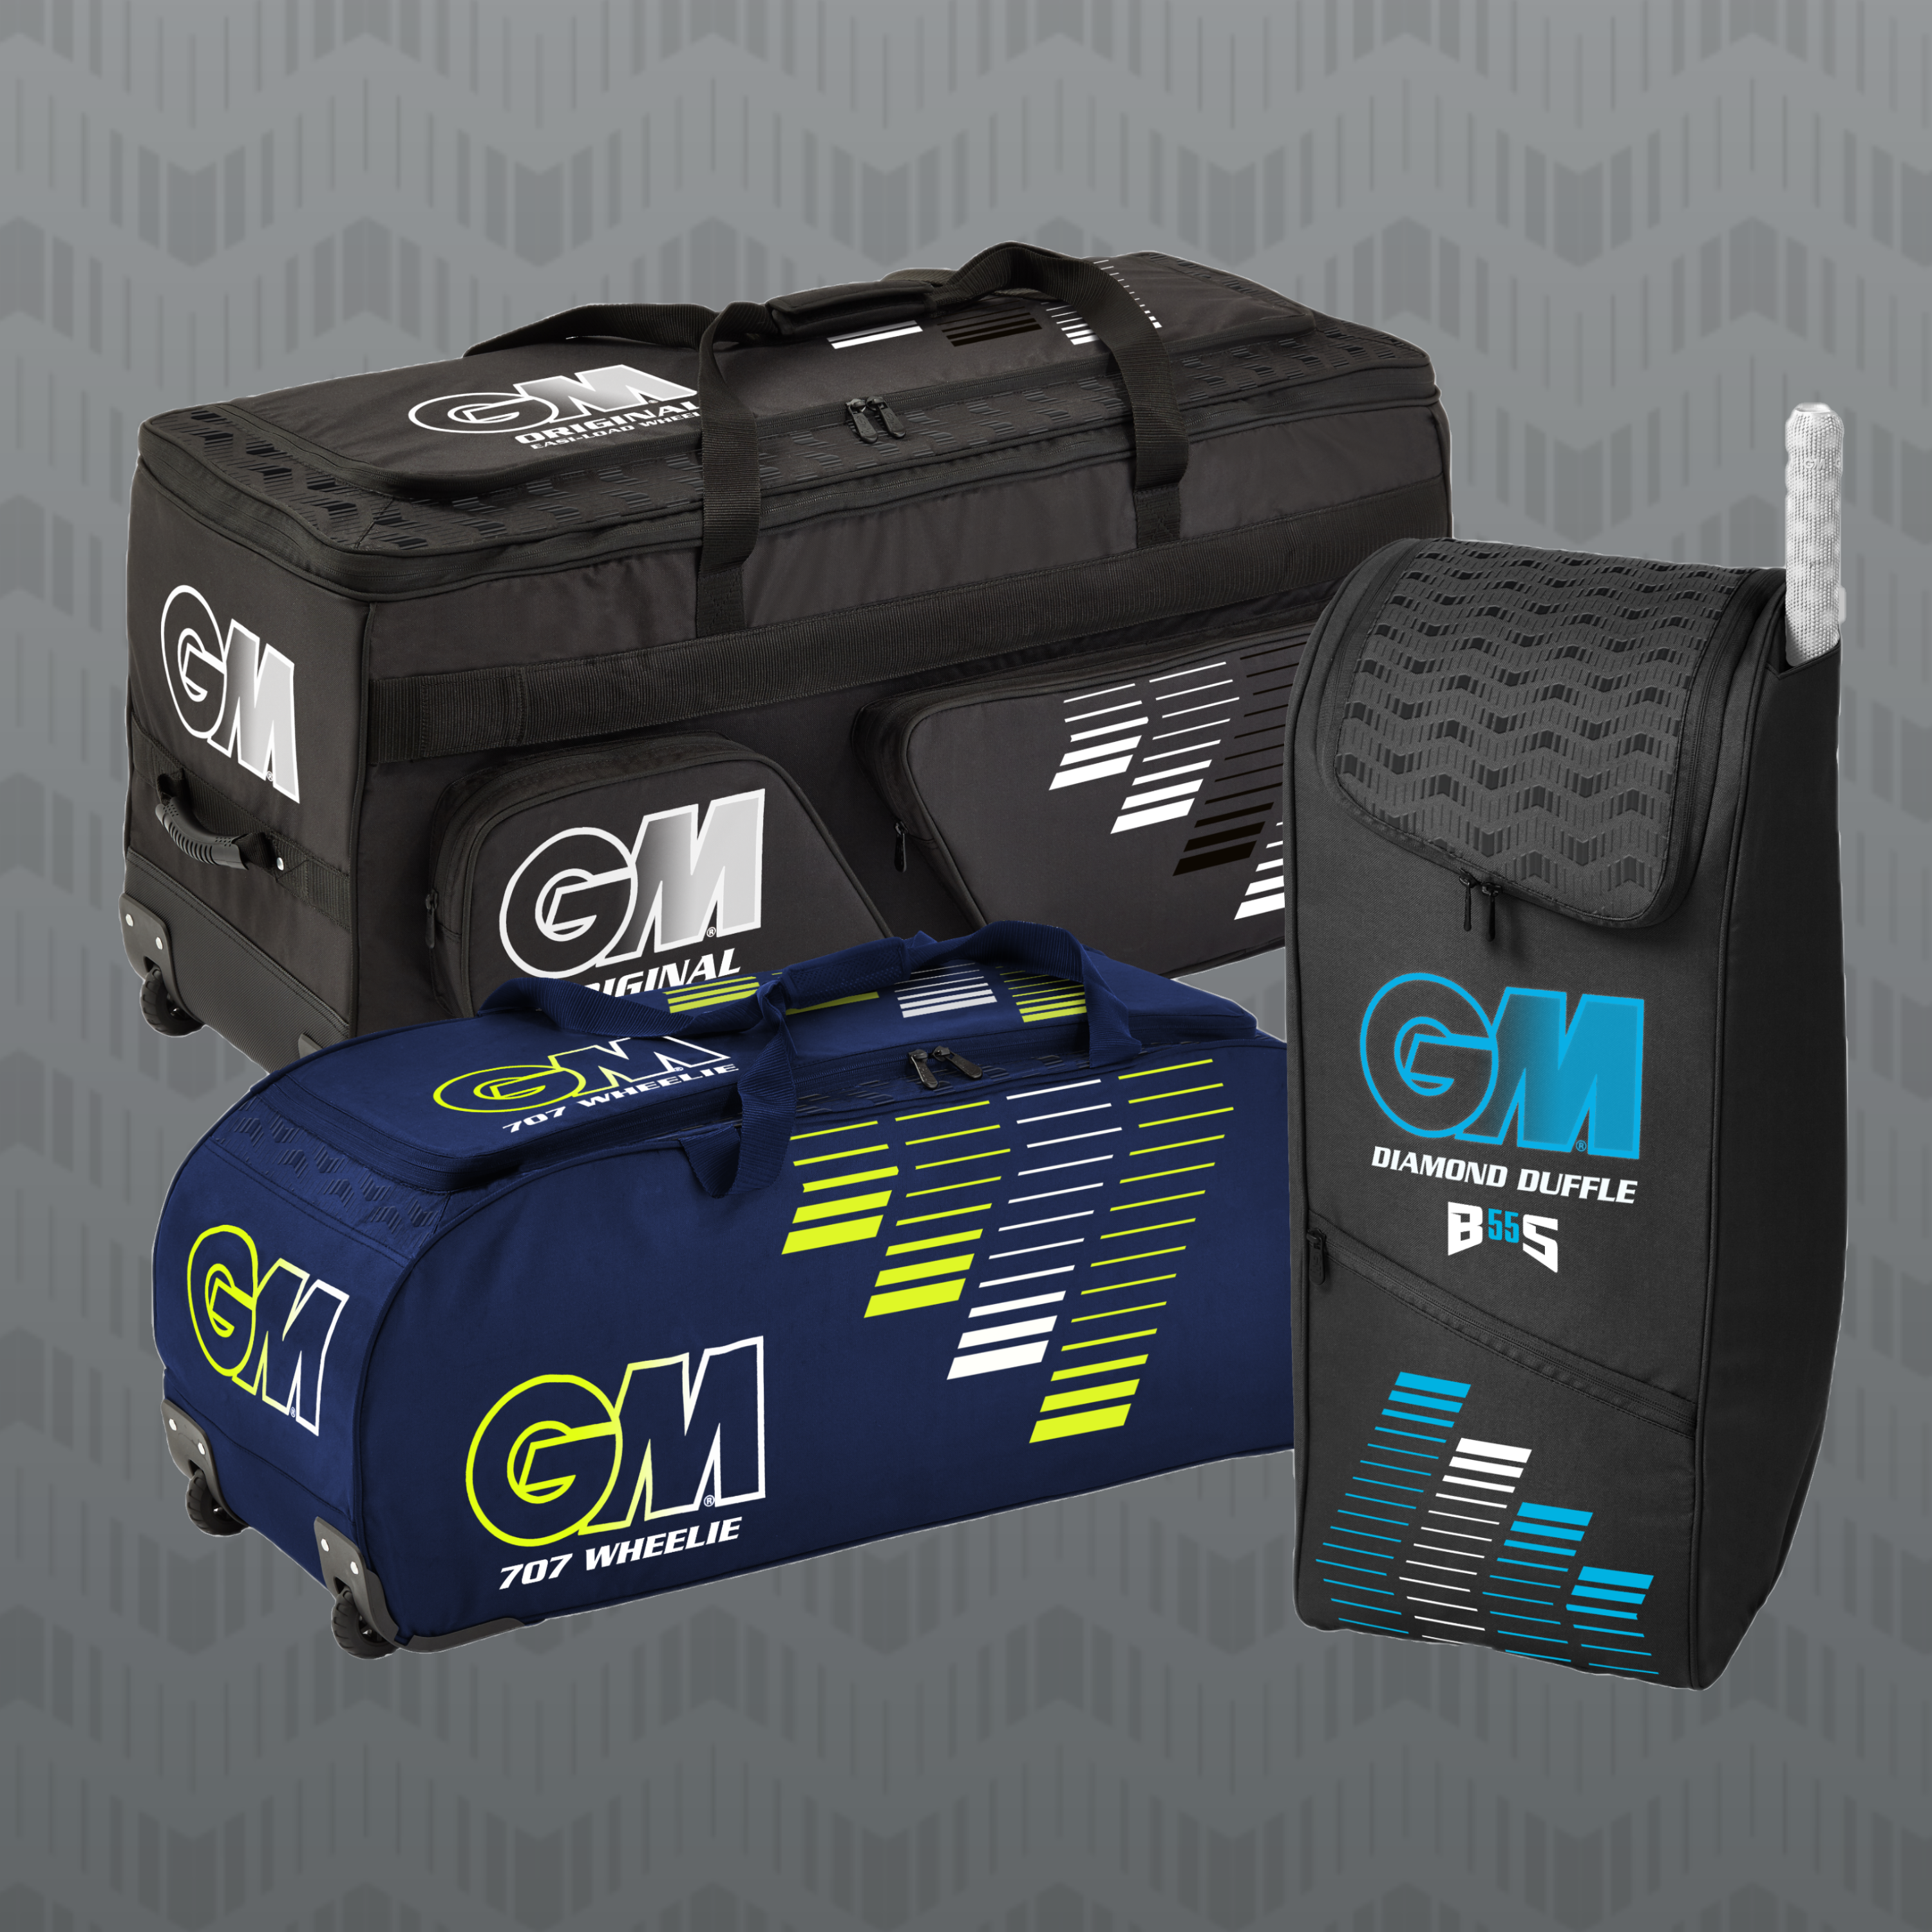 Grays G75 Black Hockey Stick and Kit Bag